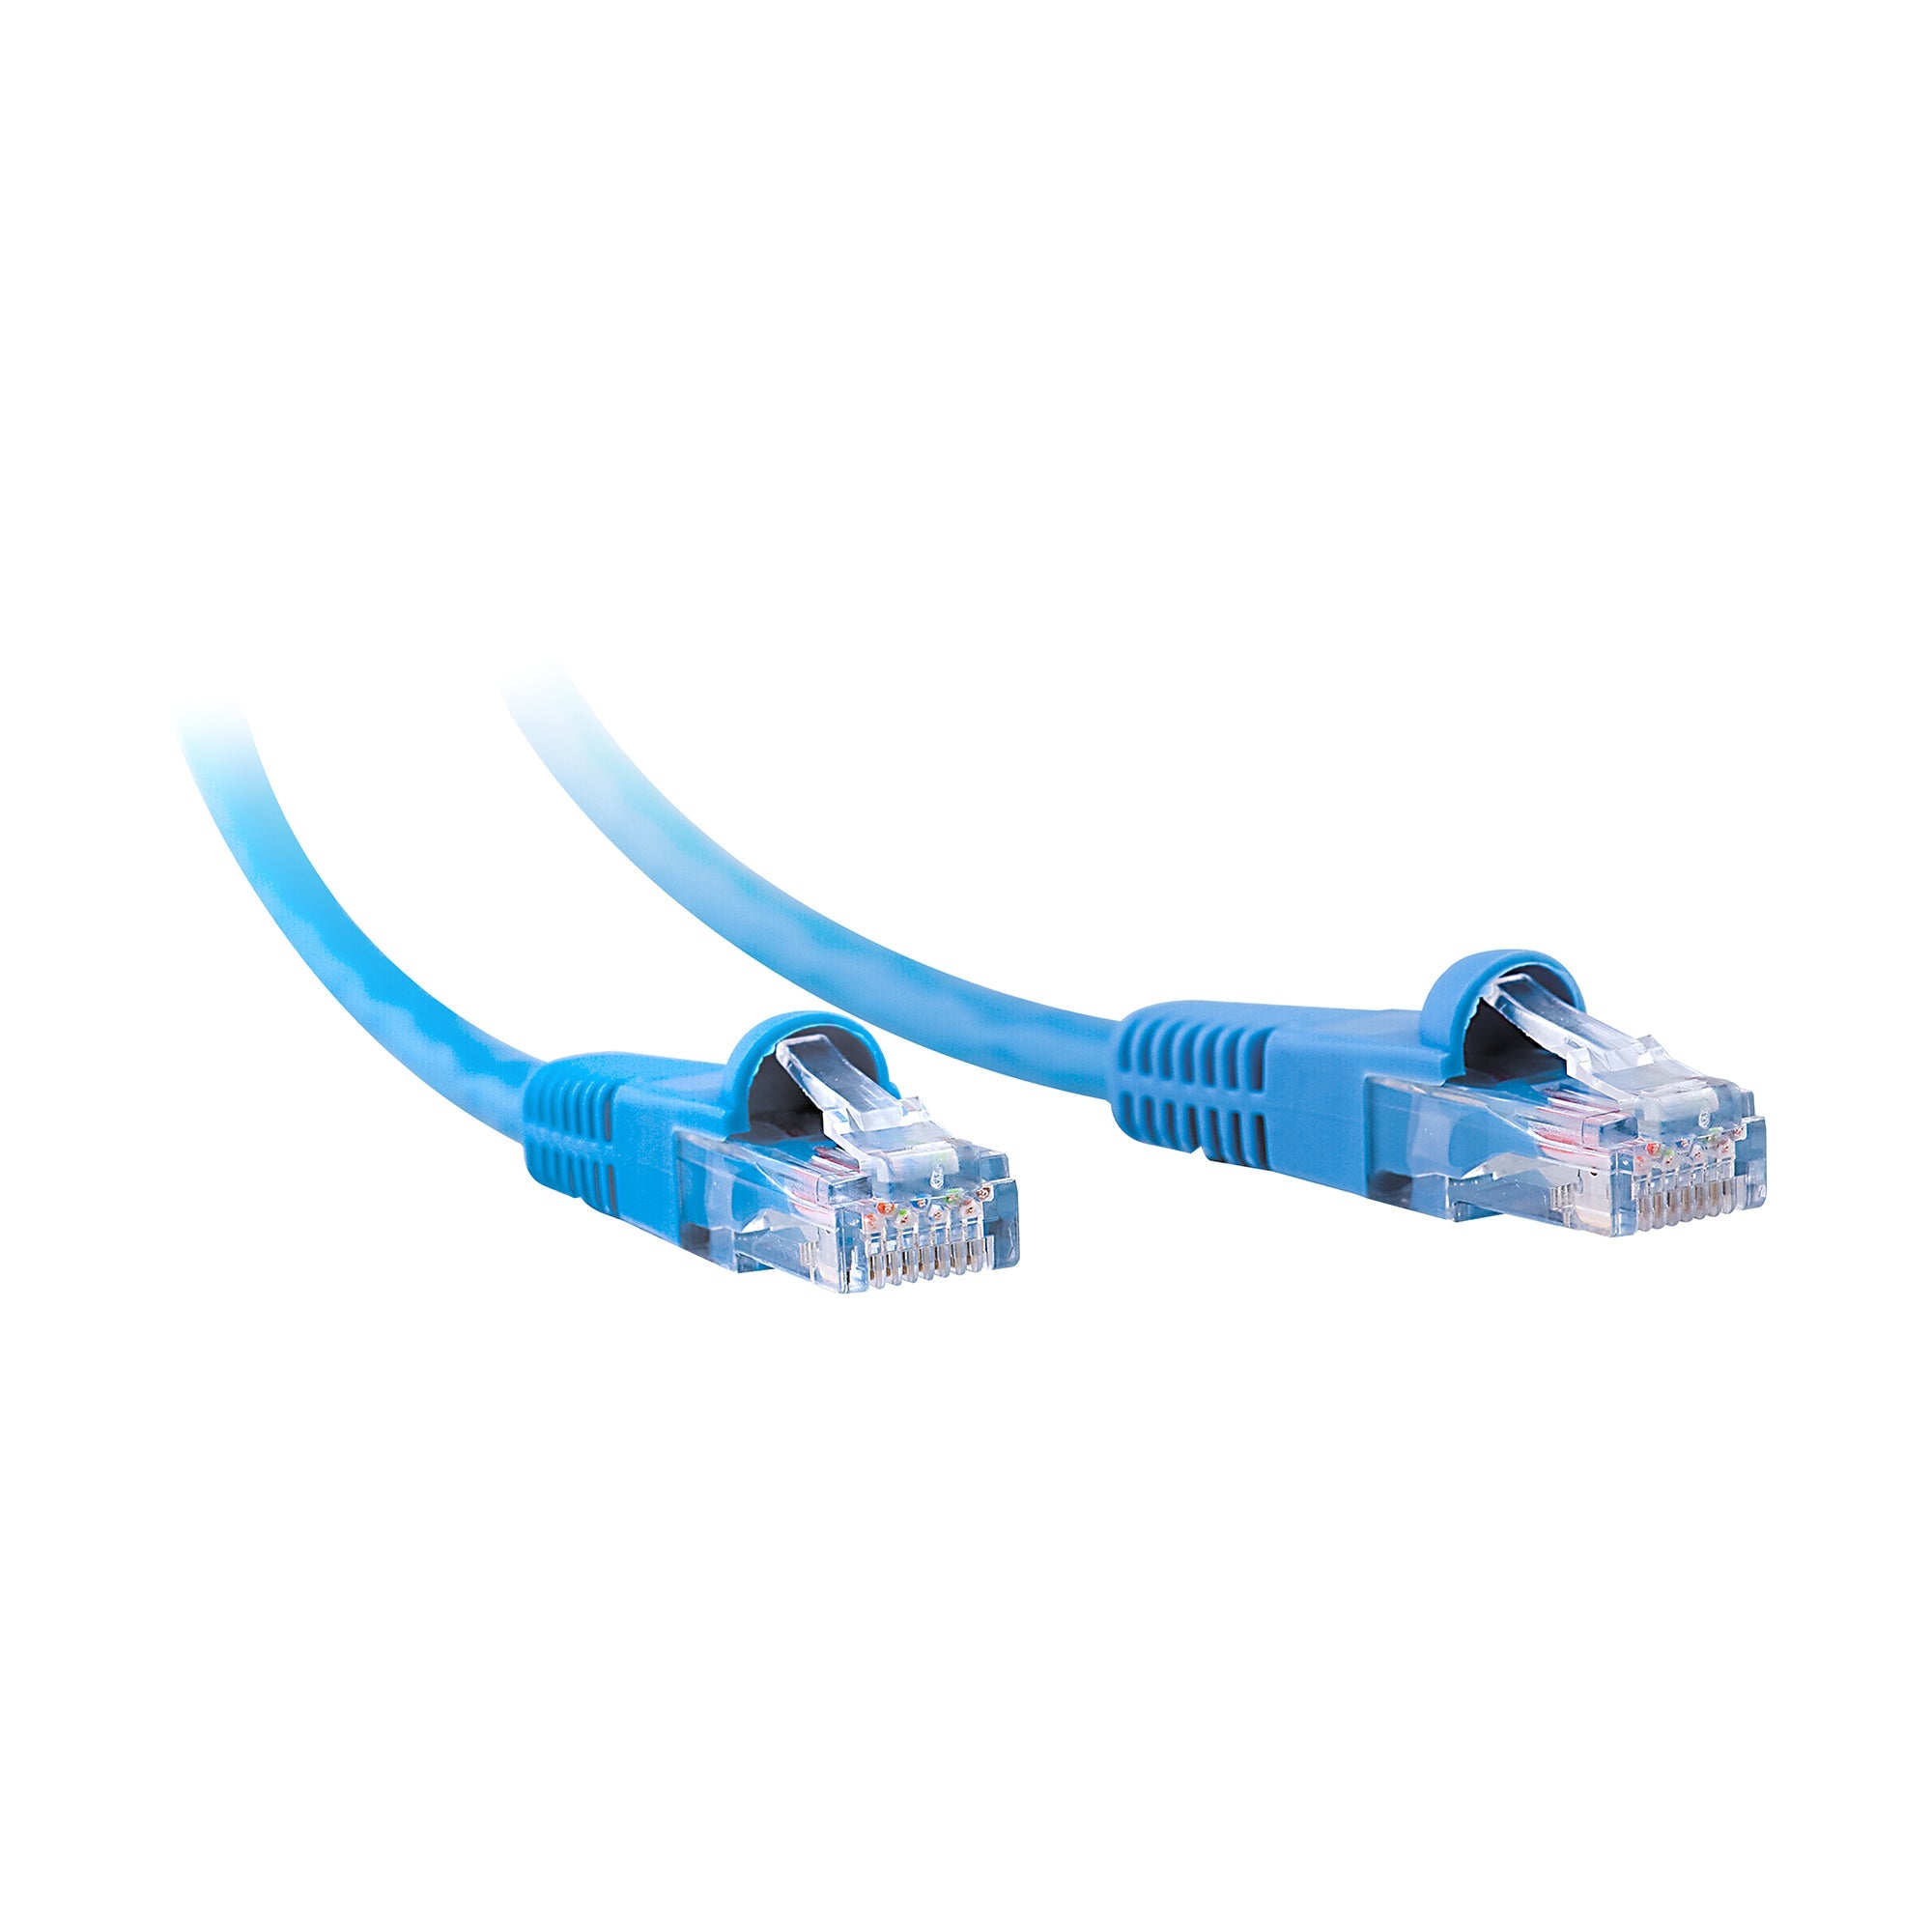 50m CAT6 RJ45 Ethernet Network Cable